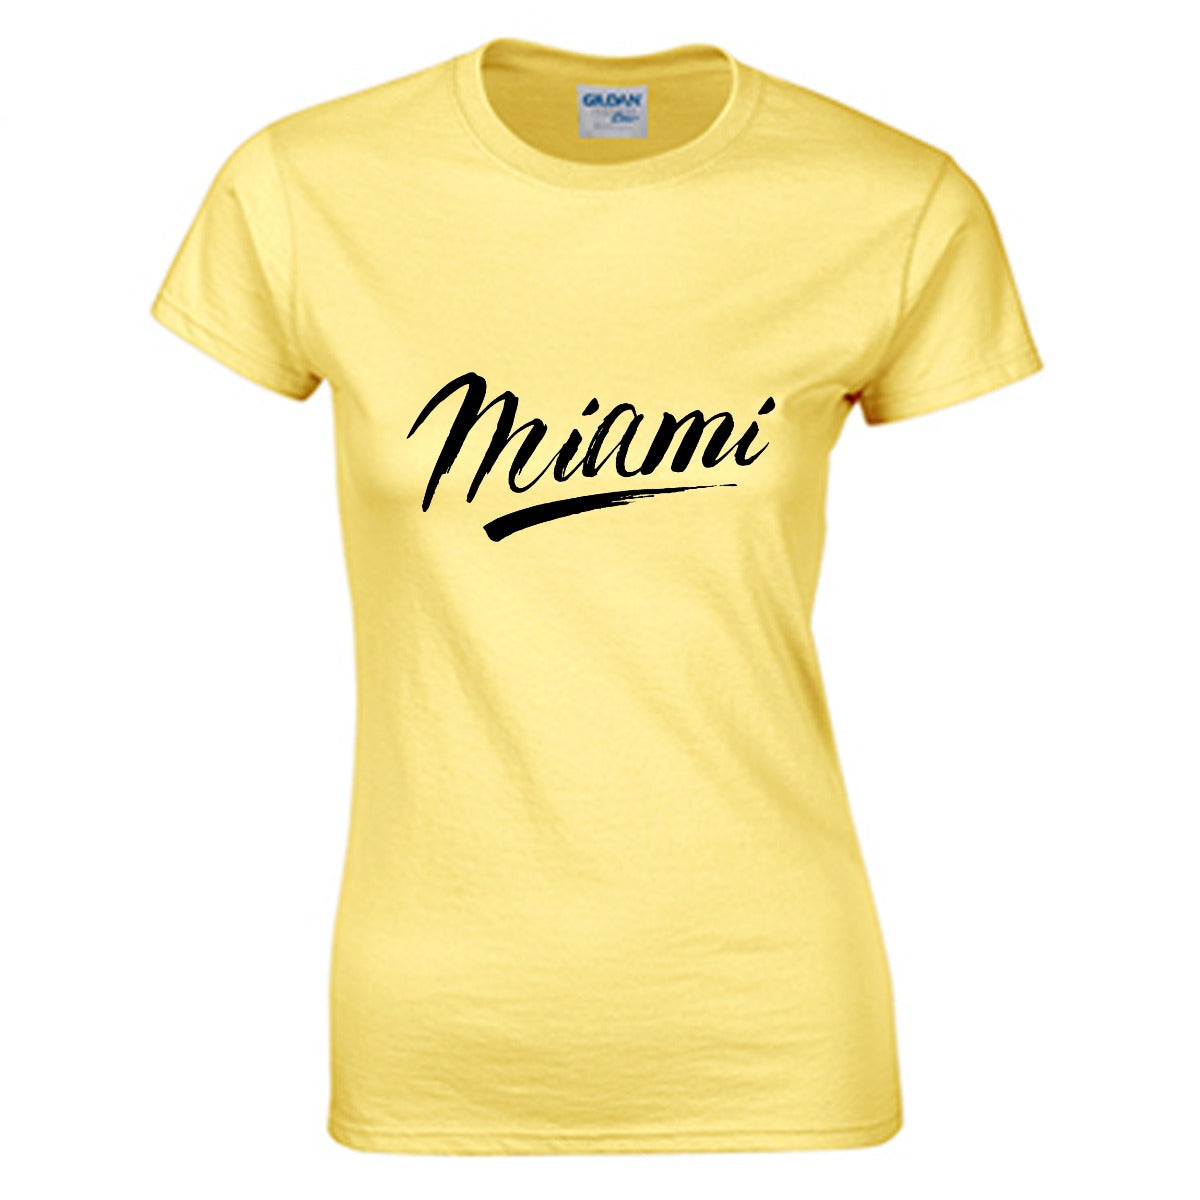 Miami Women's T-shirt (100% Cotton) - T0369